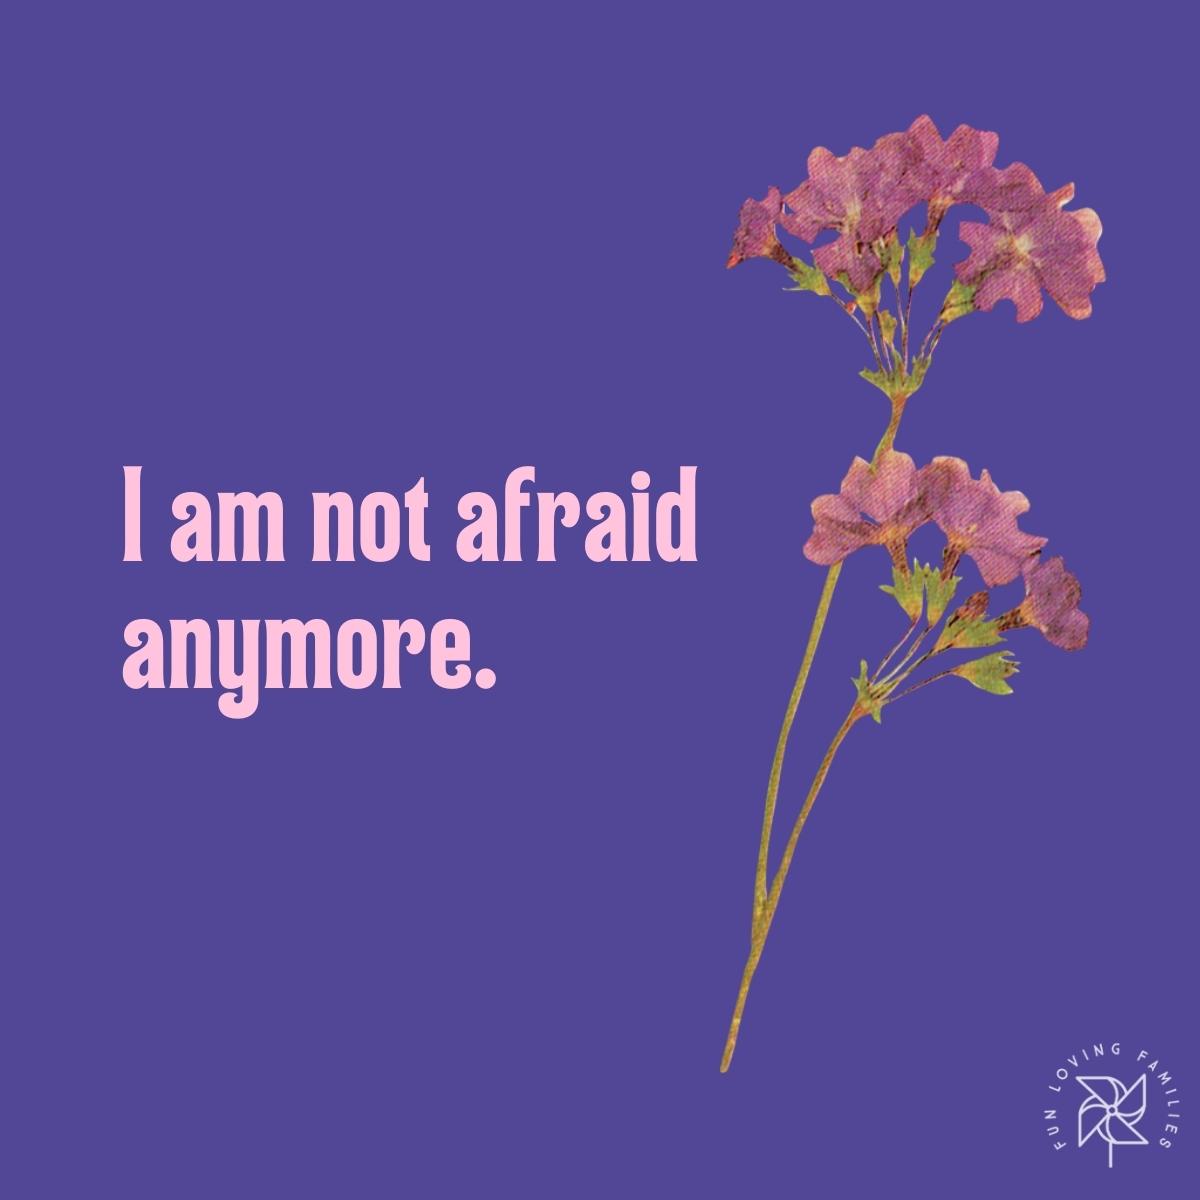 I am not afraid anymore affirmation